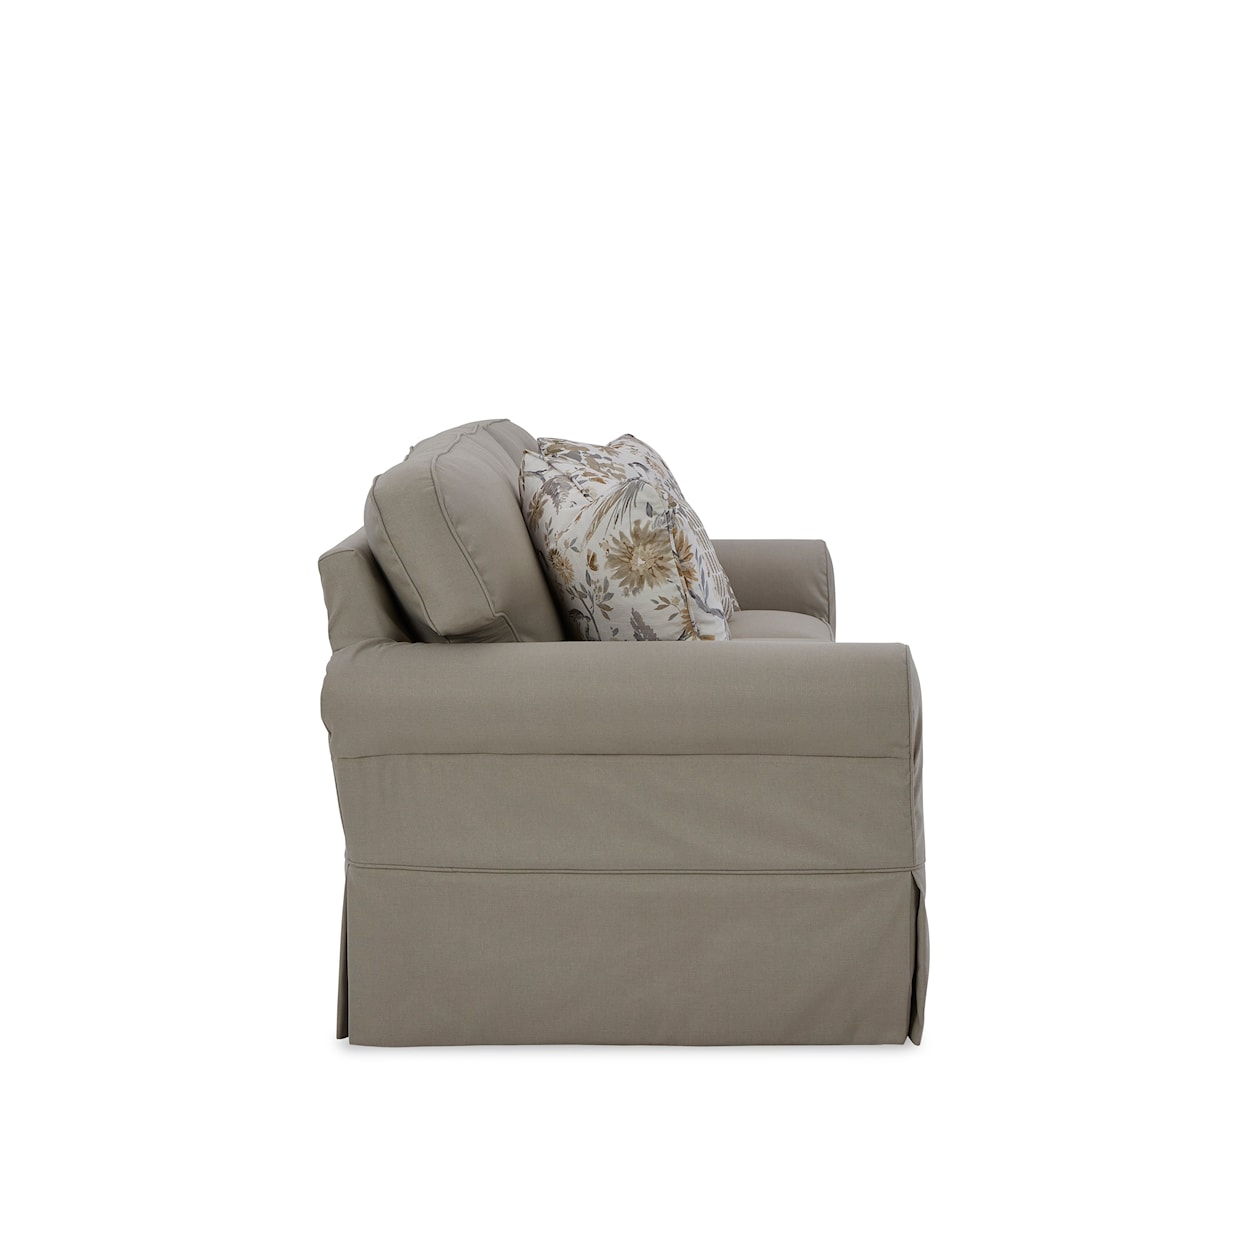 Craftmaster 917450BD Queen Sleeper Sofa (3-Seat)